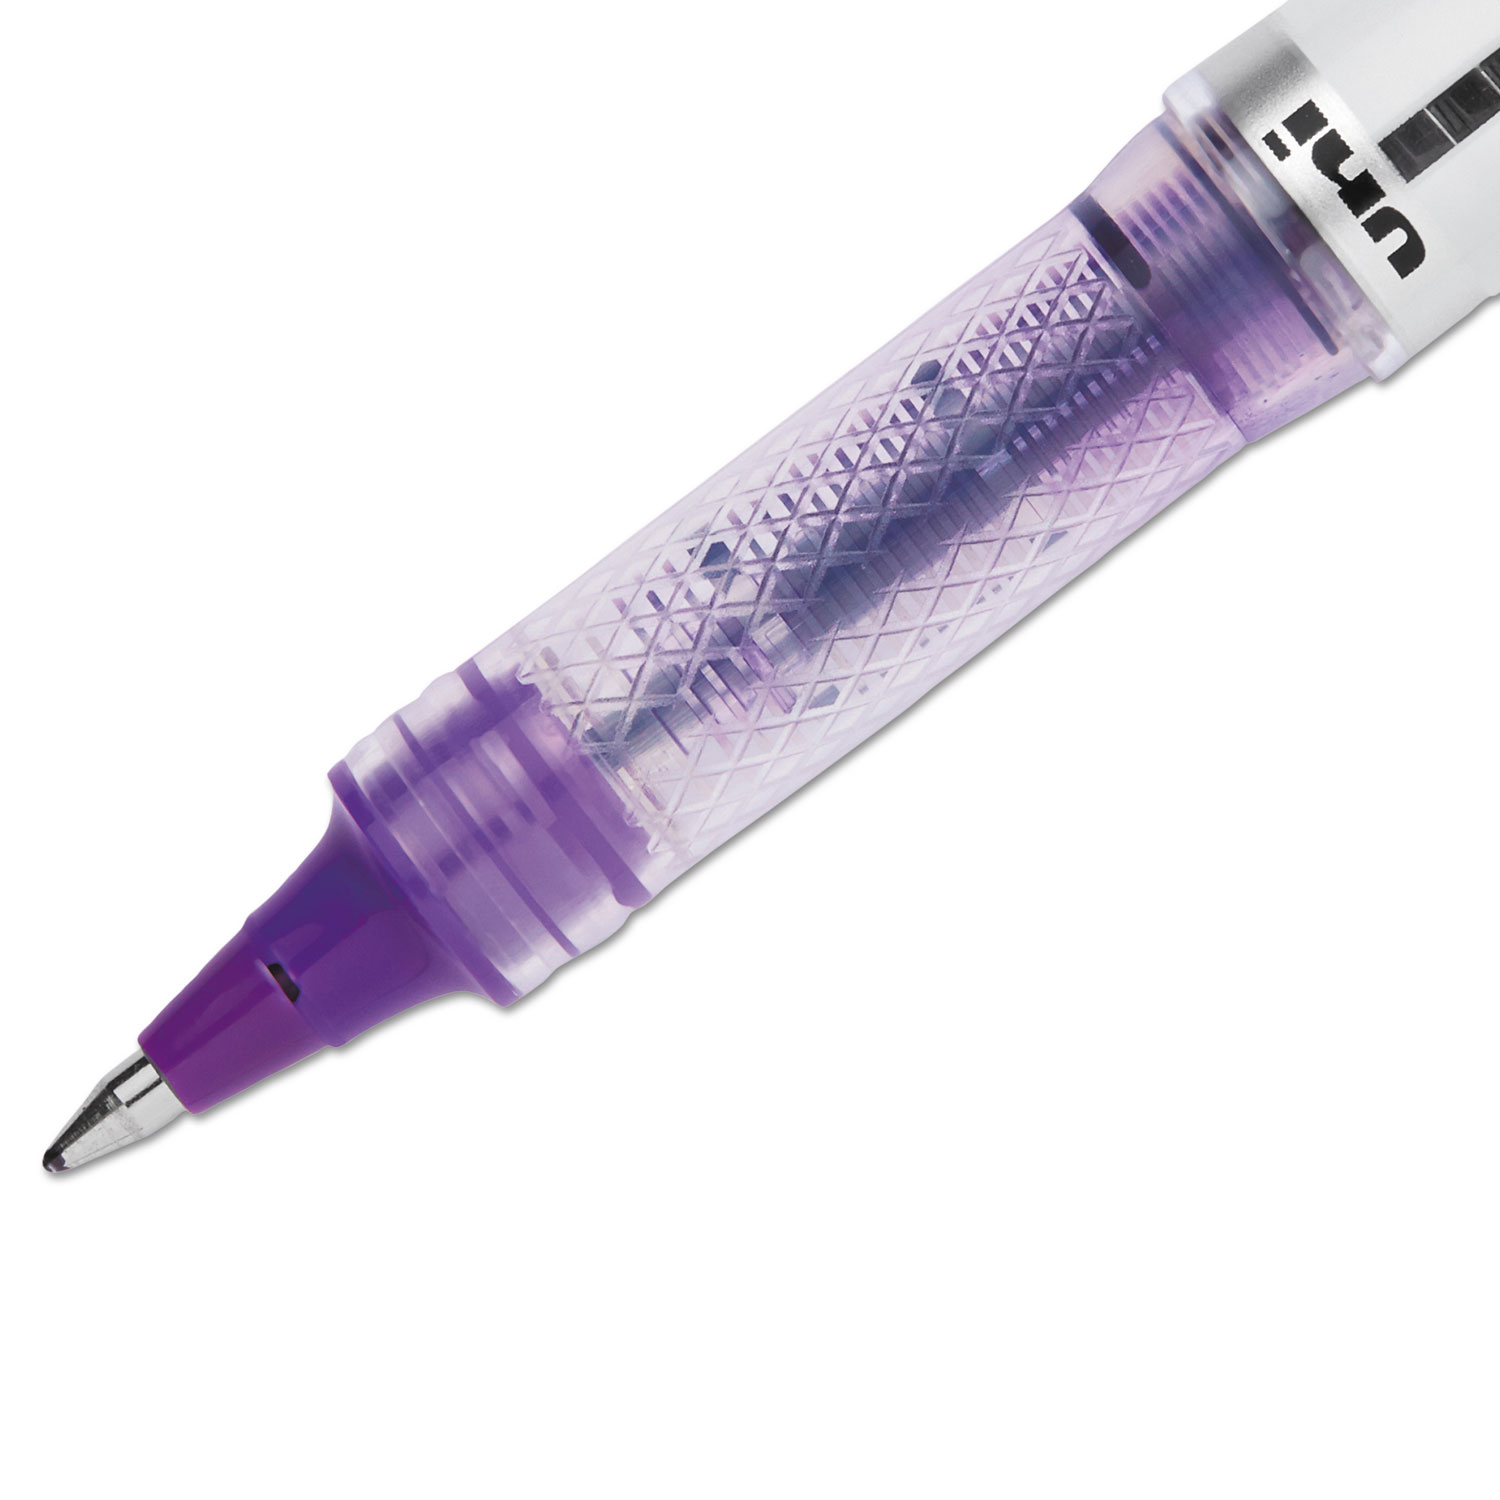 VISION ELITE Stick Roller Ball Pen, Bold 0.8mm, Purple Ink, White/Purple Barrel